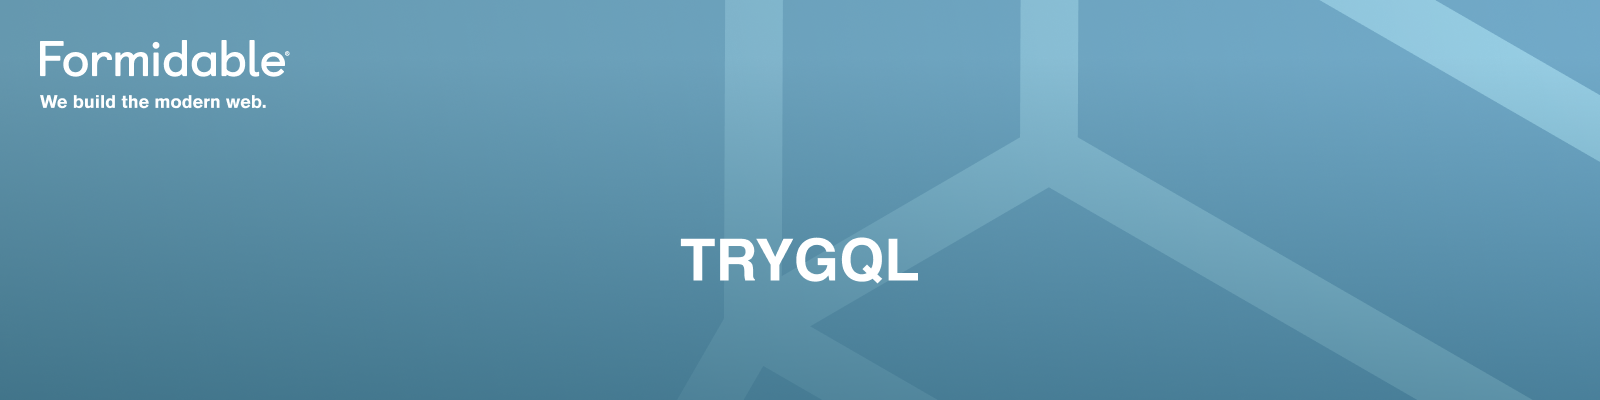 trygql — Formidable, We build the modern web